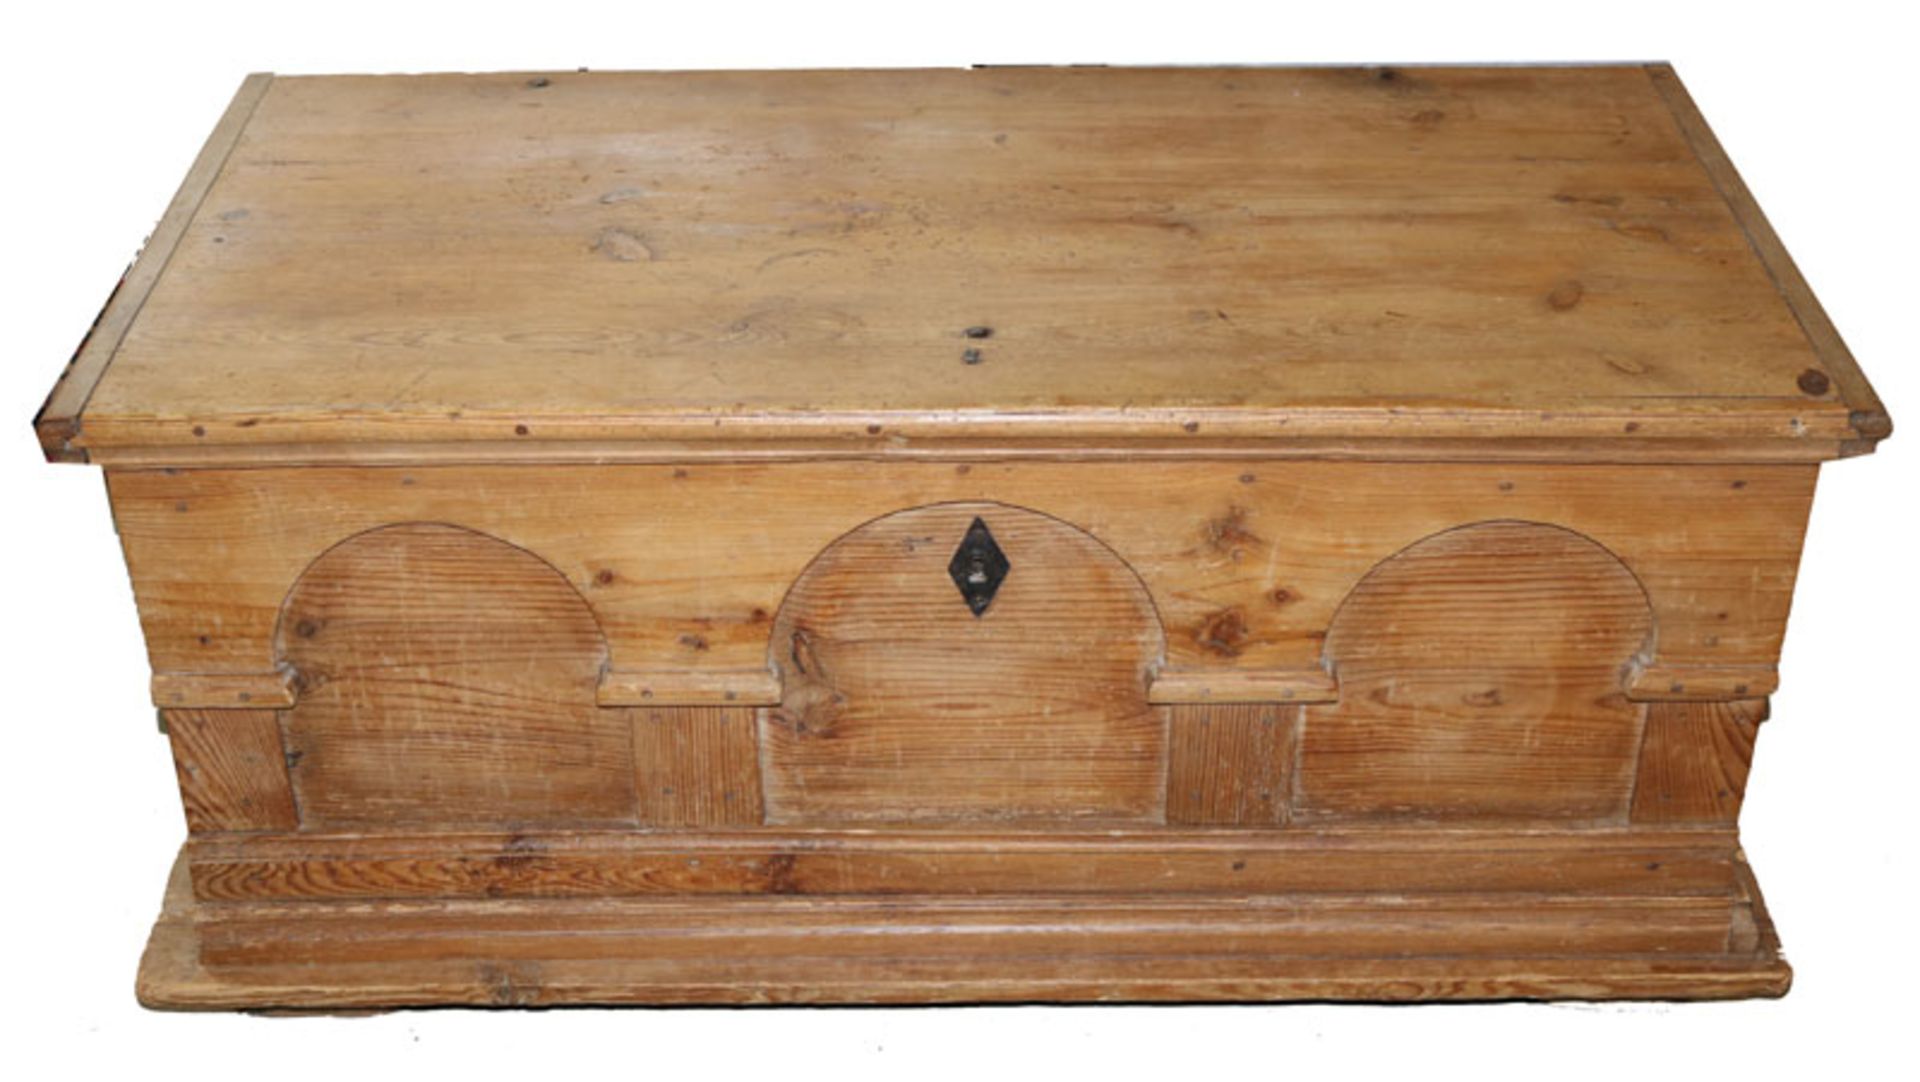 Truhe, Nadelholz, schauseitig verziert, H 56 cm, B 120 cm, T 60 cm, 19. Jahrhundert,